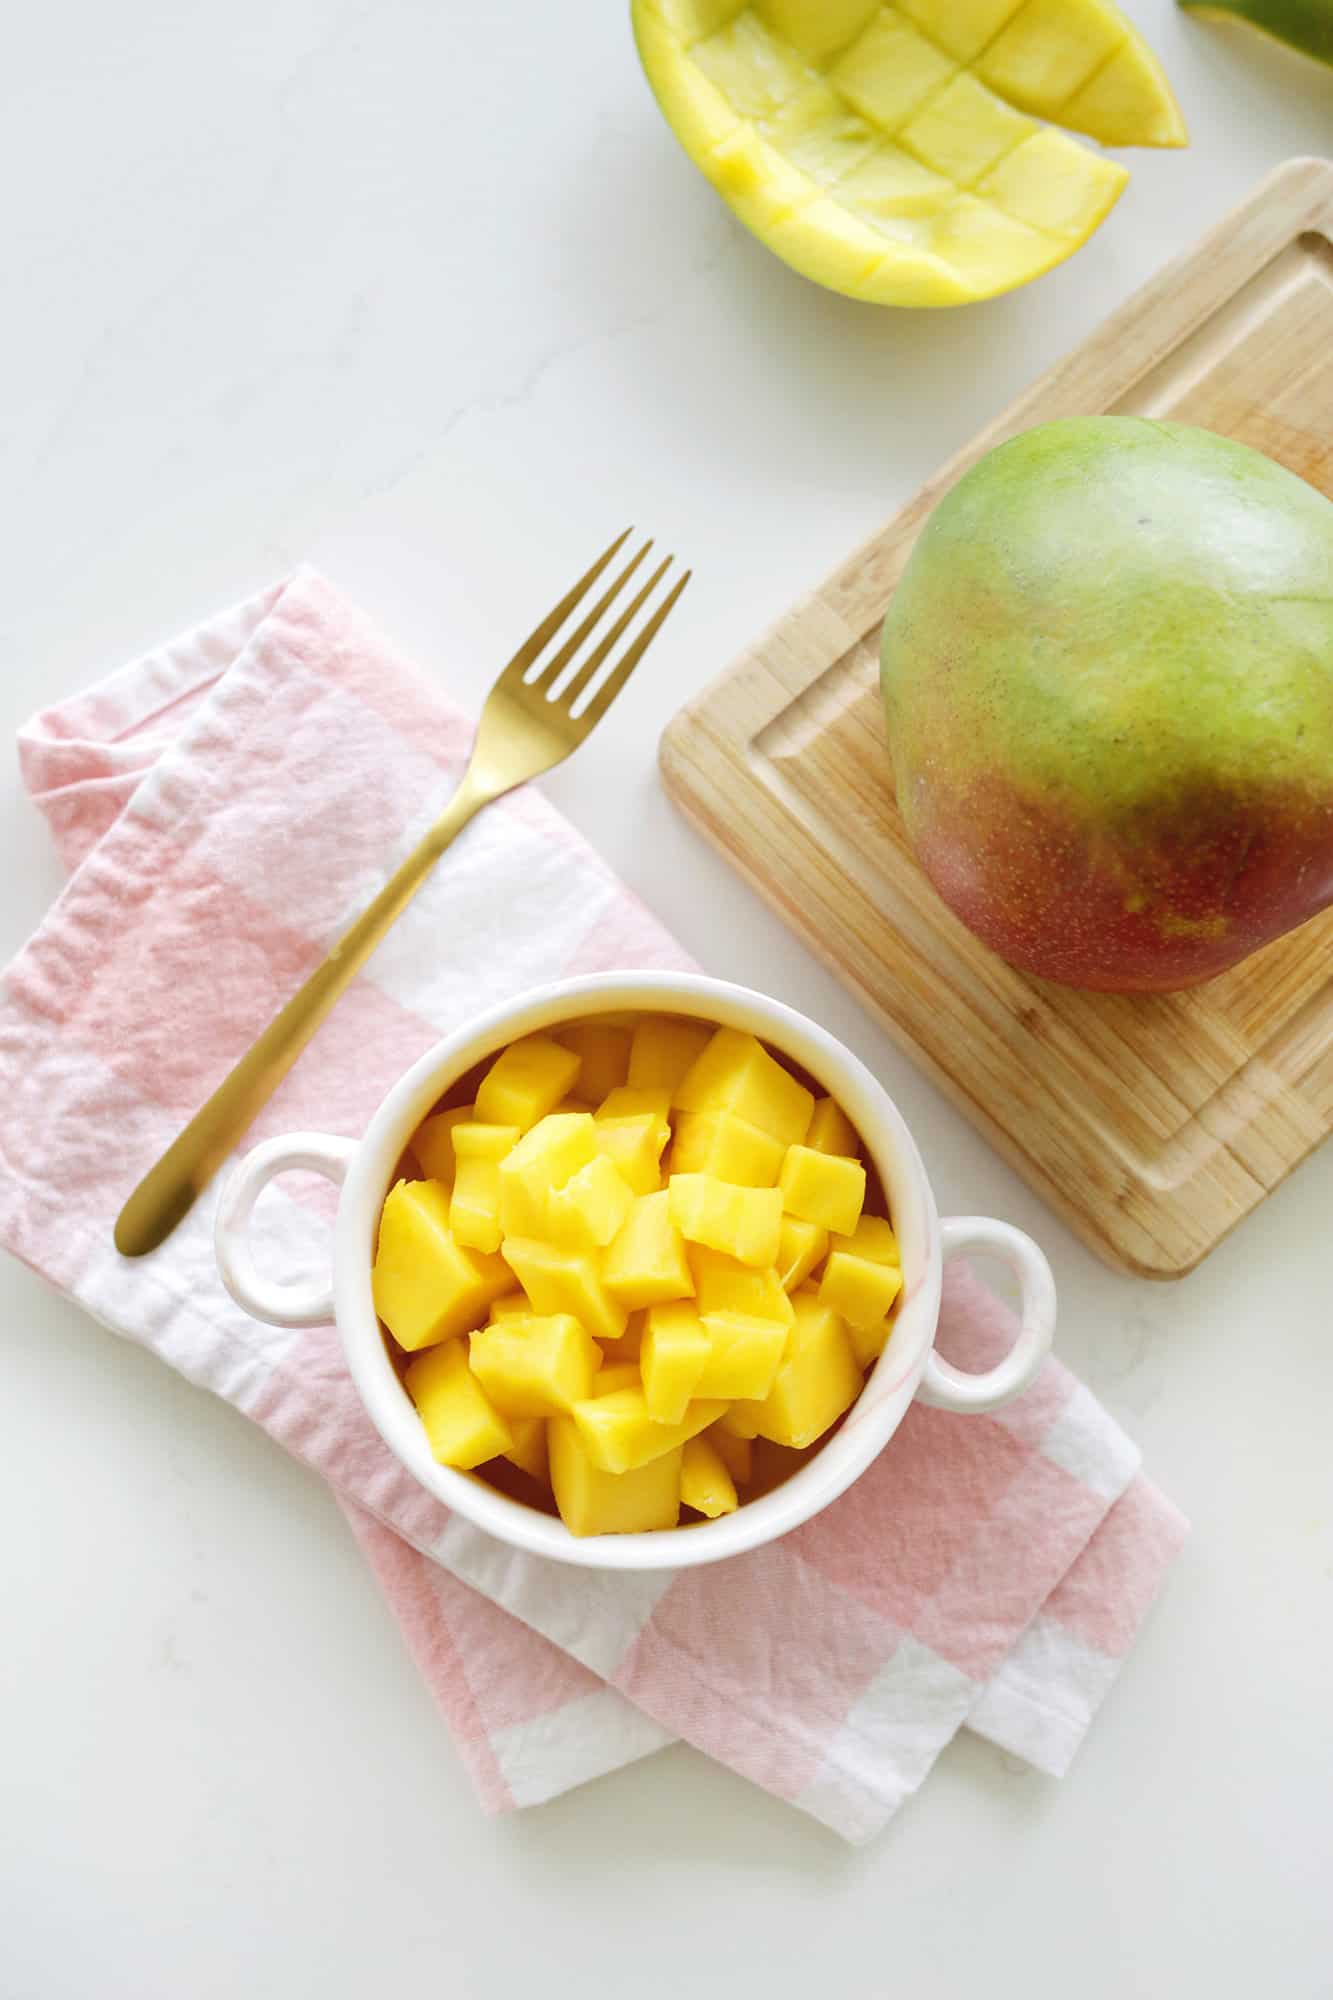 Mango and mango cubes for easy way to cut mango